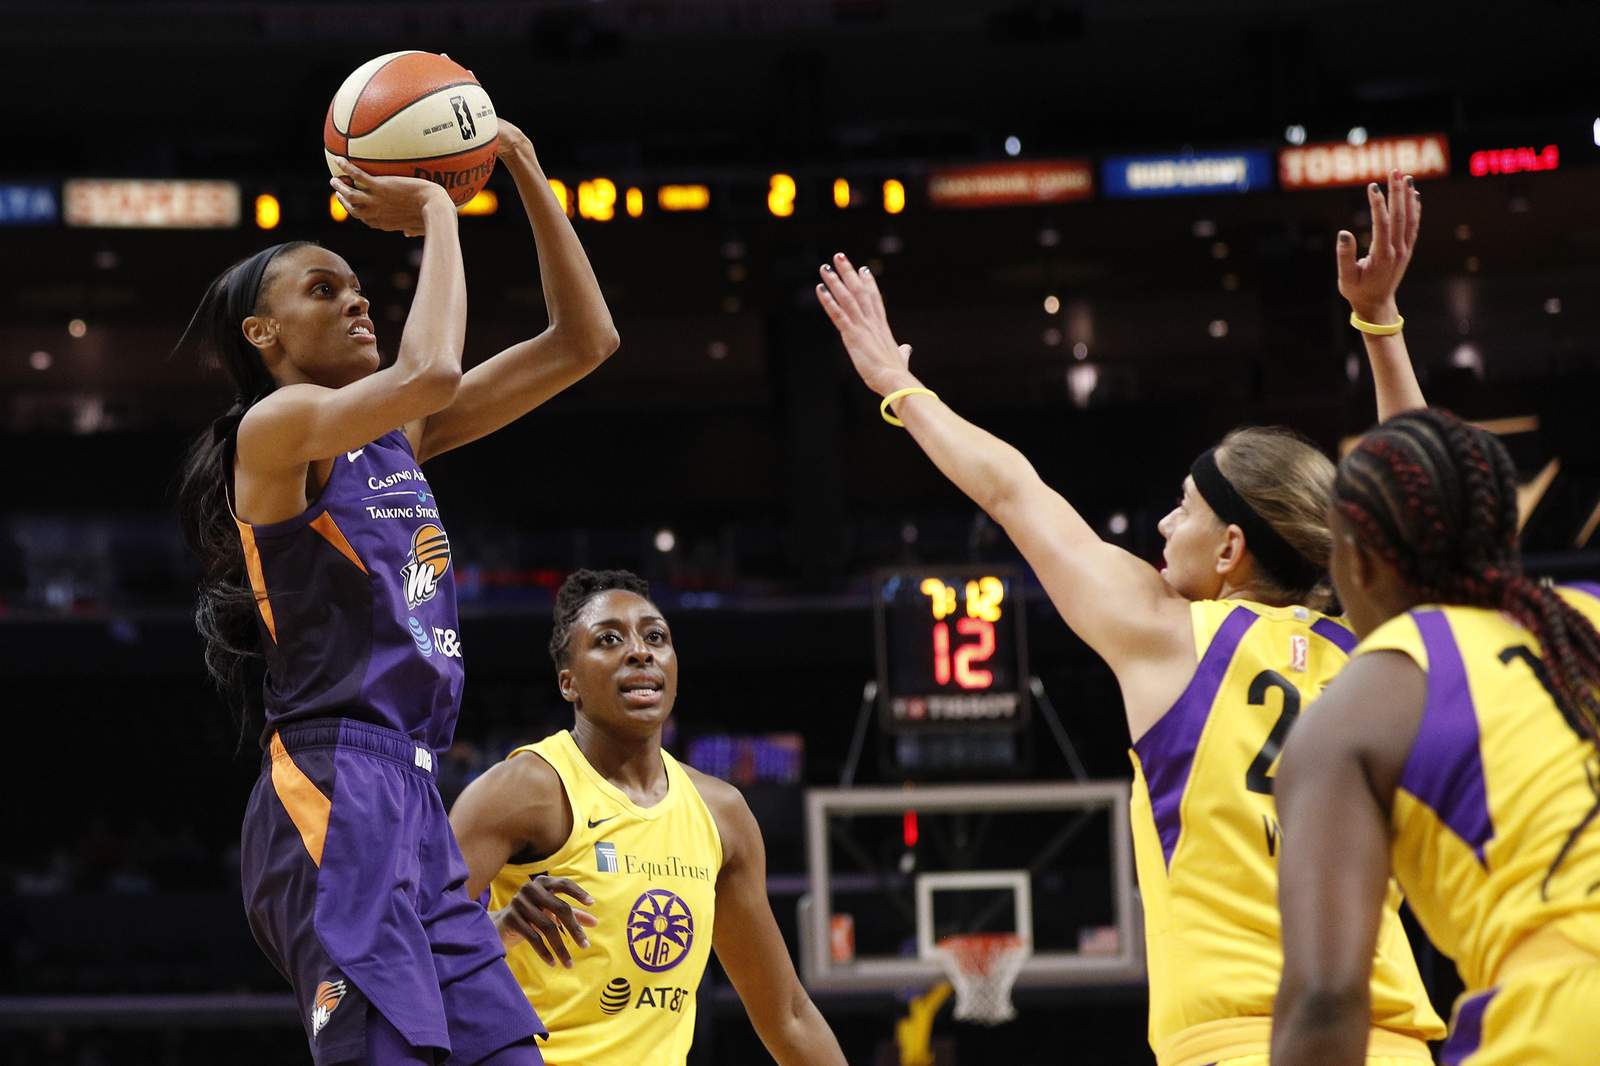 WNBA: Recap of the three matchups on Wednesday